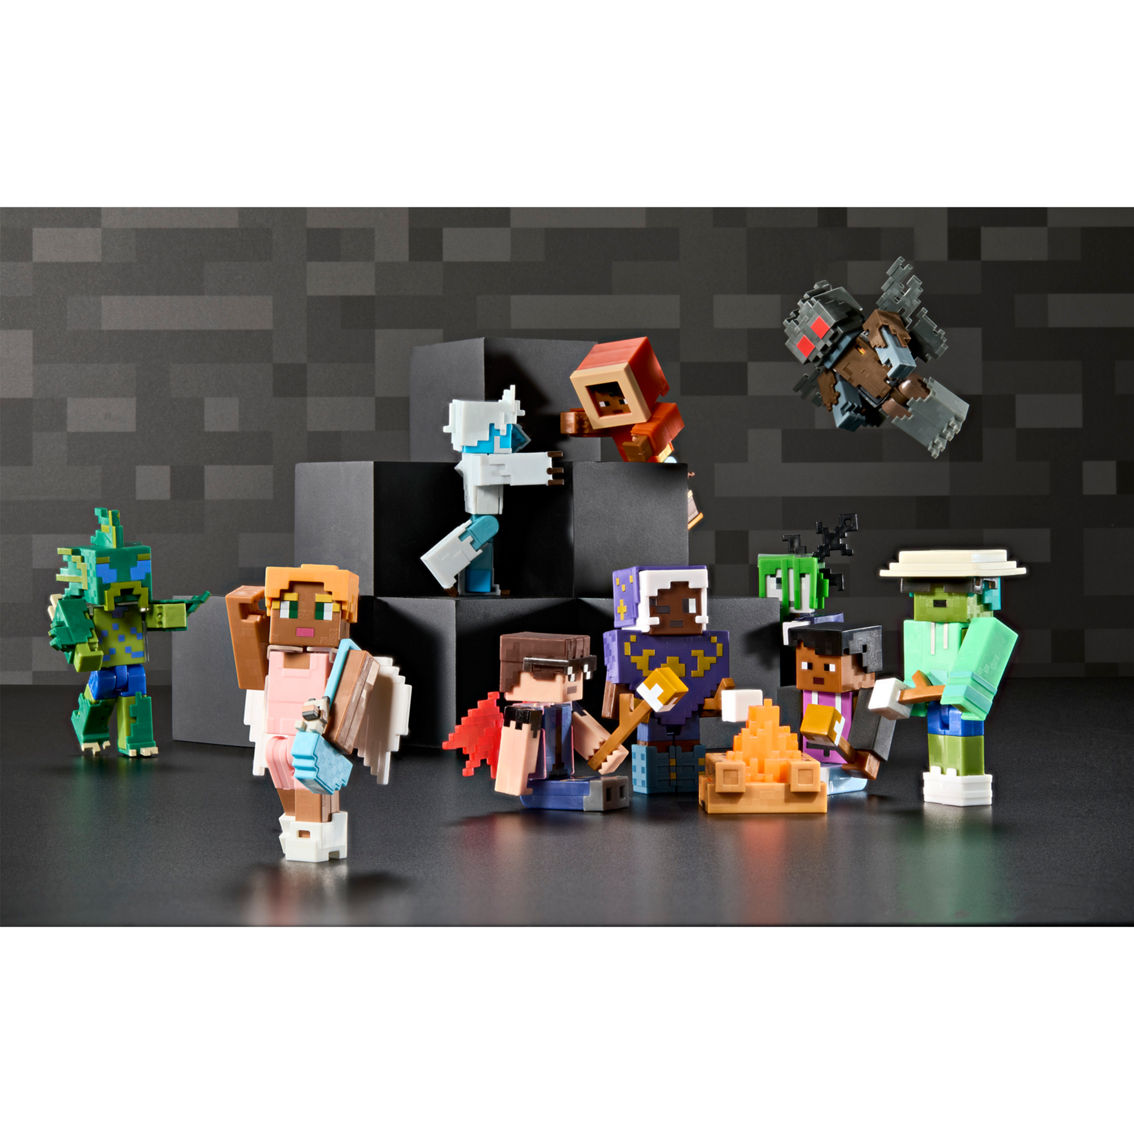 Mattel Minecraft Creator Series Figures - Image 5 of 5